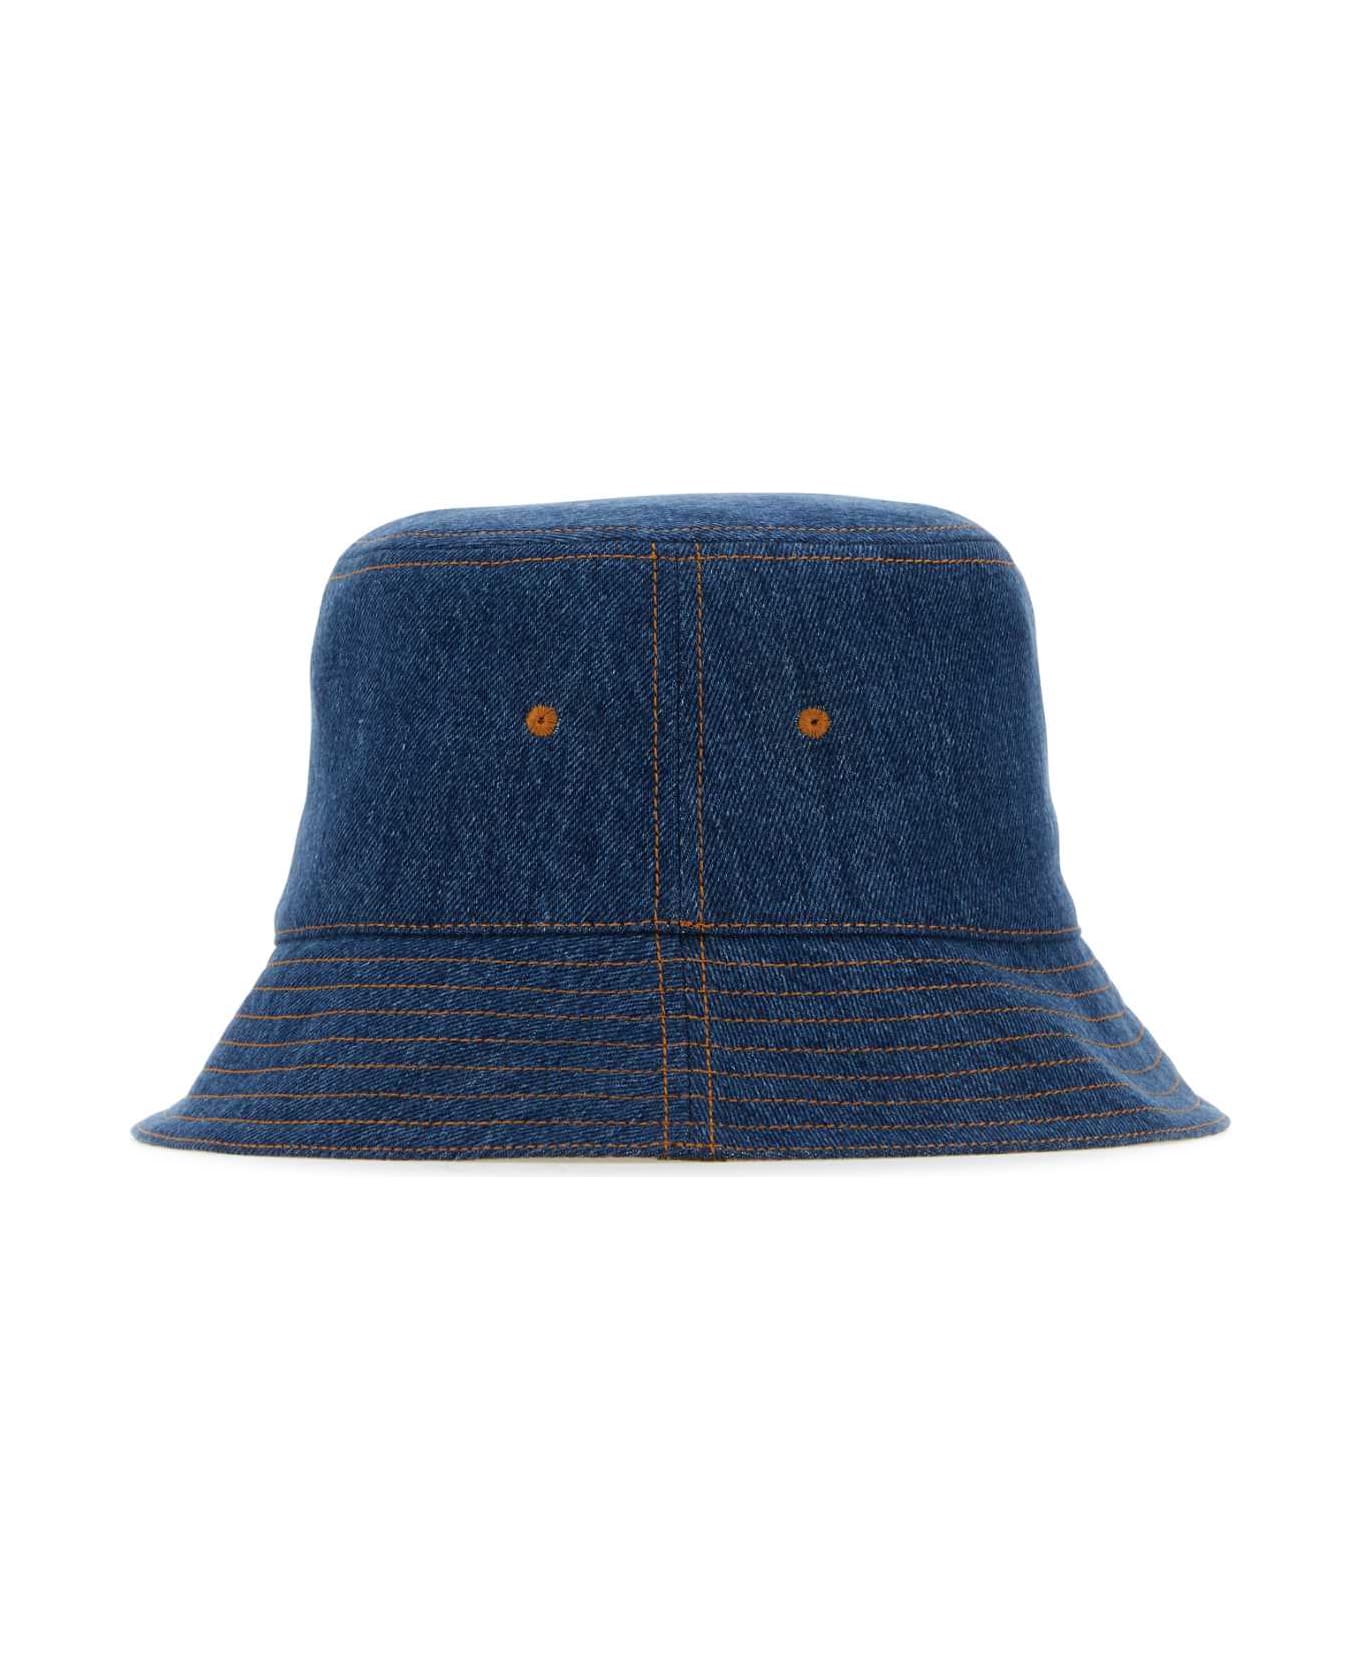 Burberry Denim Bucket Hat - WASHEDINDIGO